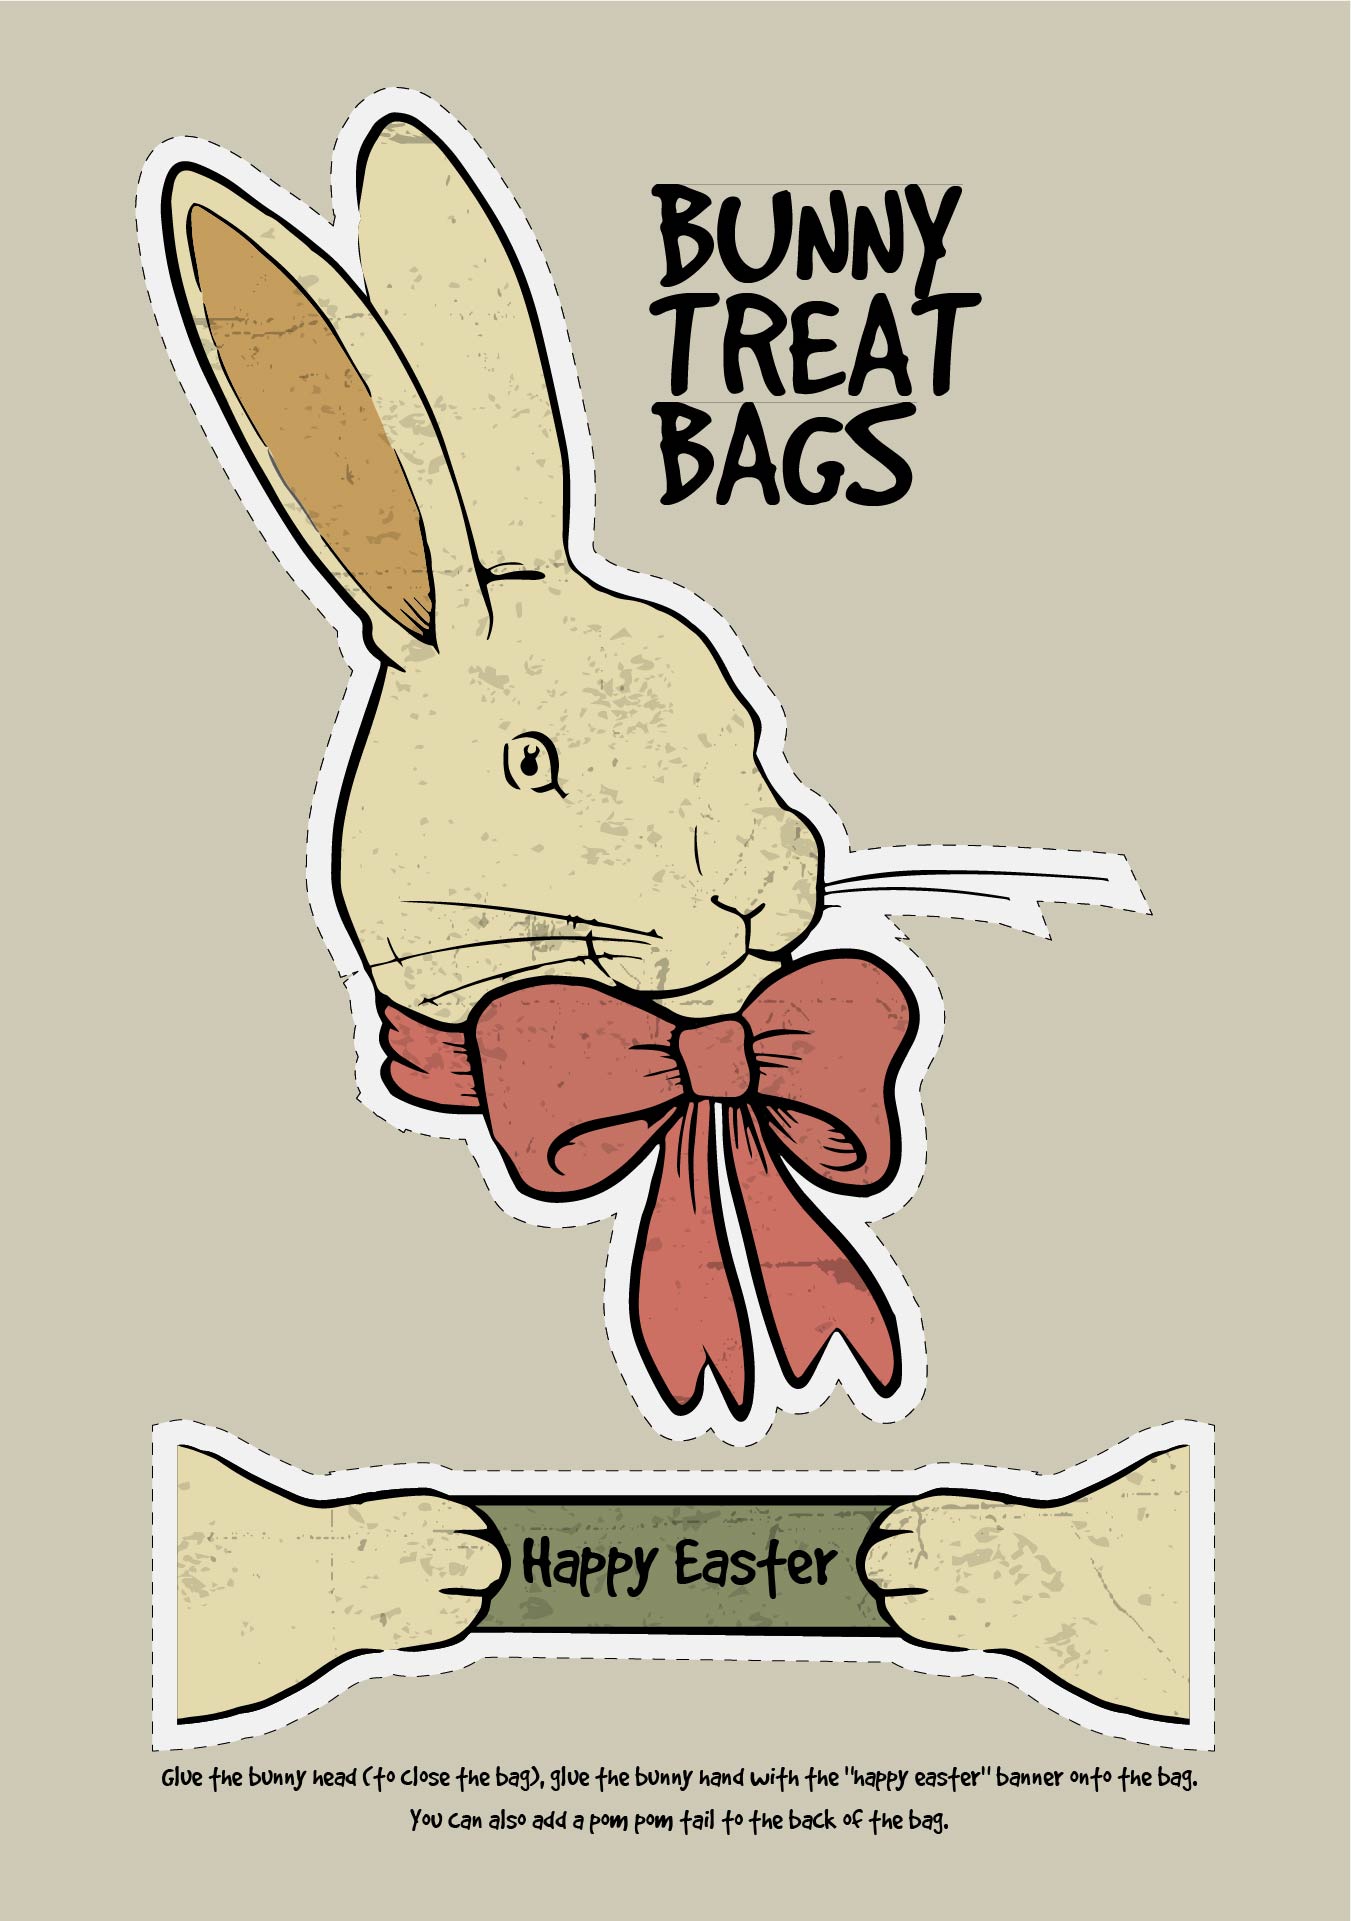 Printable Easter Treat Bag Vintage